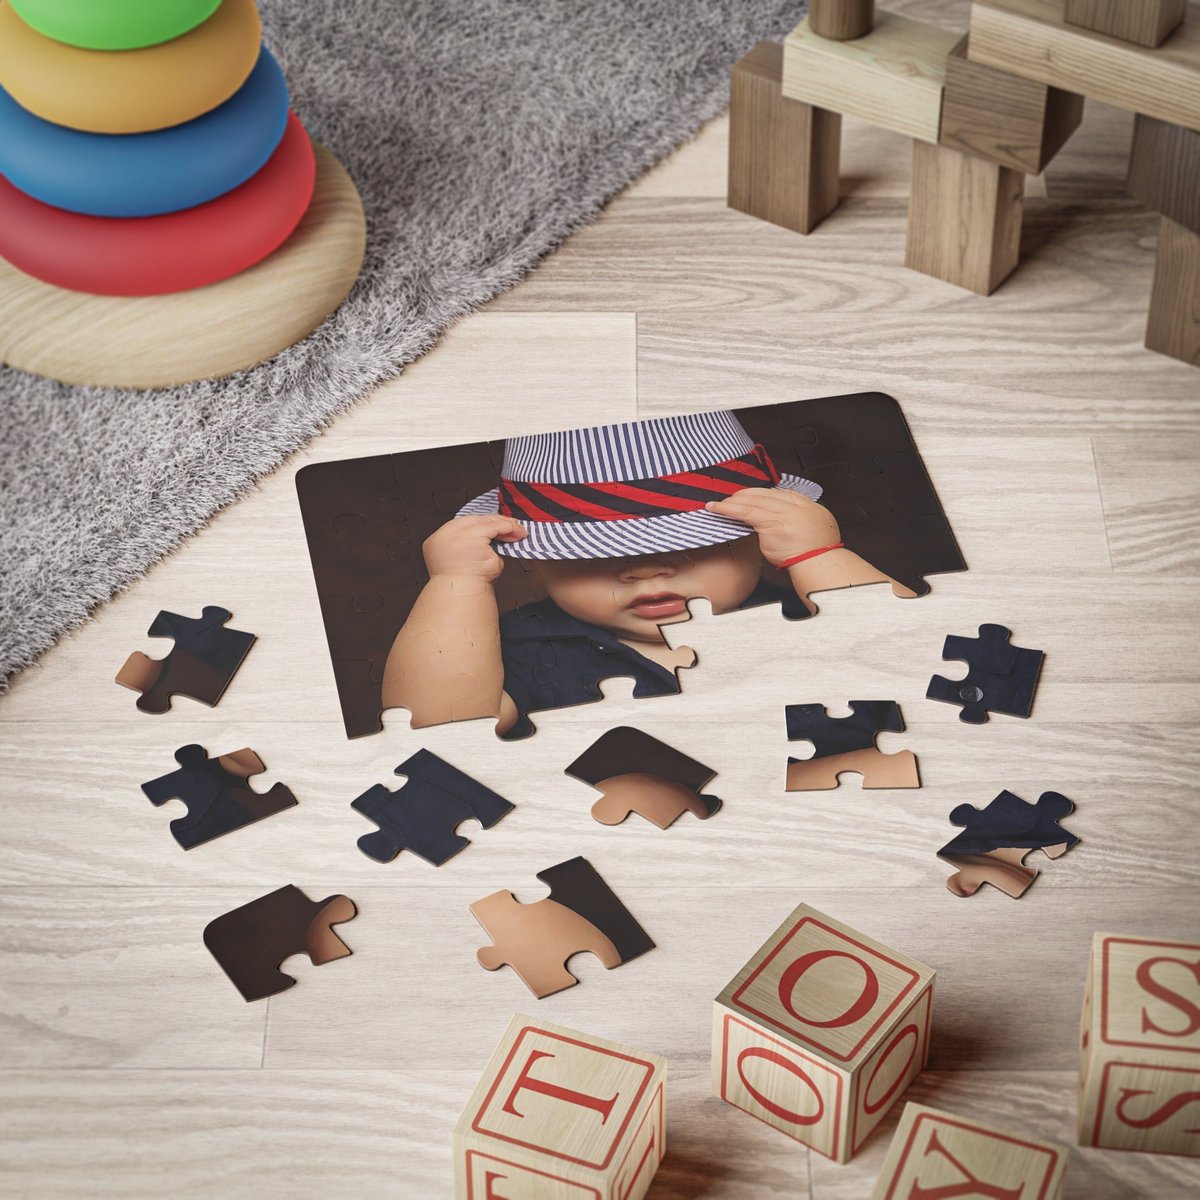 Photo Puzzle Gift 8x10 30 pieces. Montessori toys.  #1stbirthday #toddlergifts #custompuzzlekids #personalizedpuzzle #kidstoyspuzzle #preschooltoys #preschoolgifts #montisorrytoys #heirloom gift #emotionalgift #babygifts #toyideas #puzzlelover etsy.me/3XePRRF